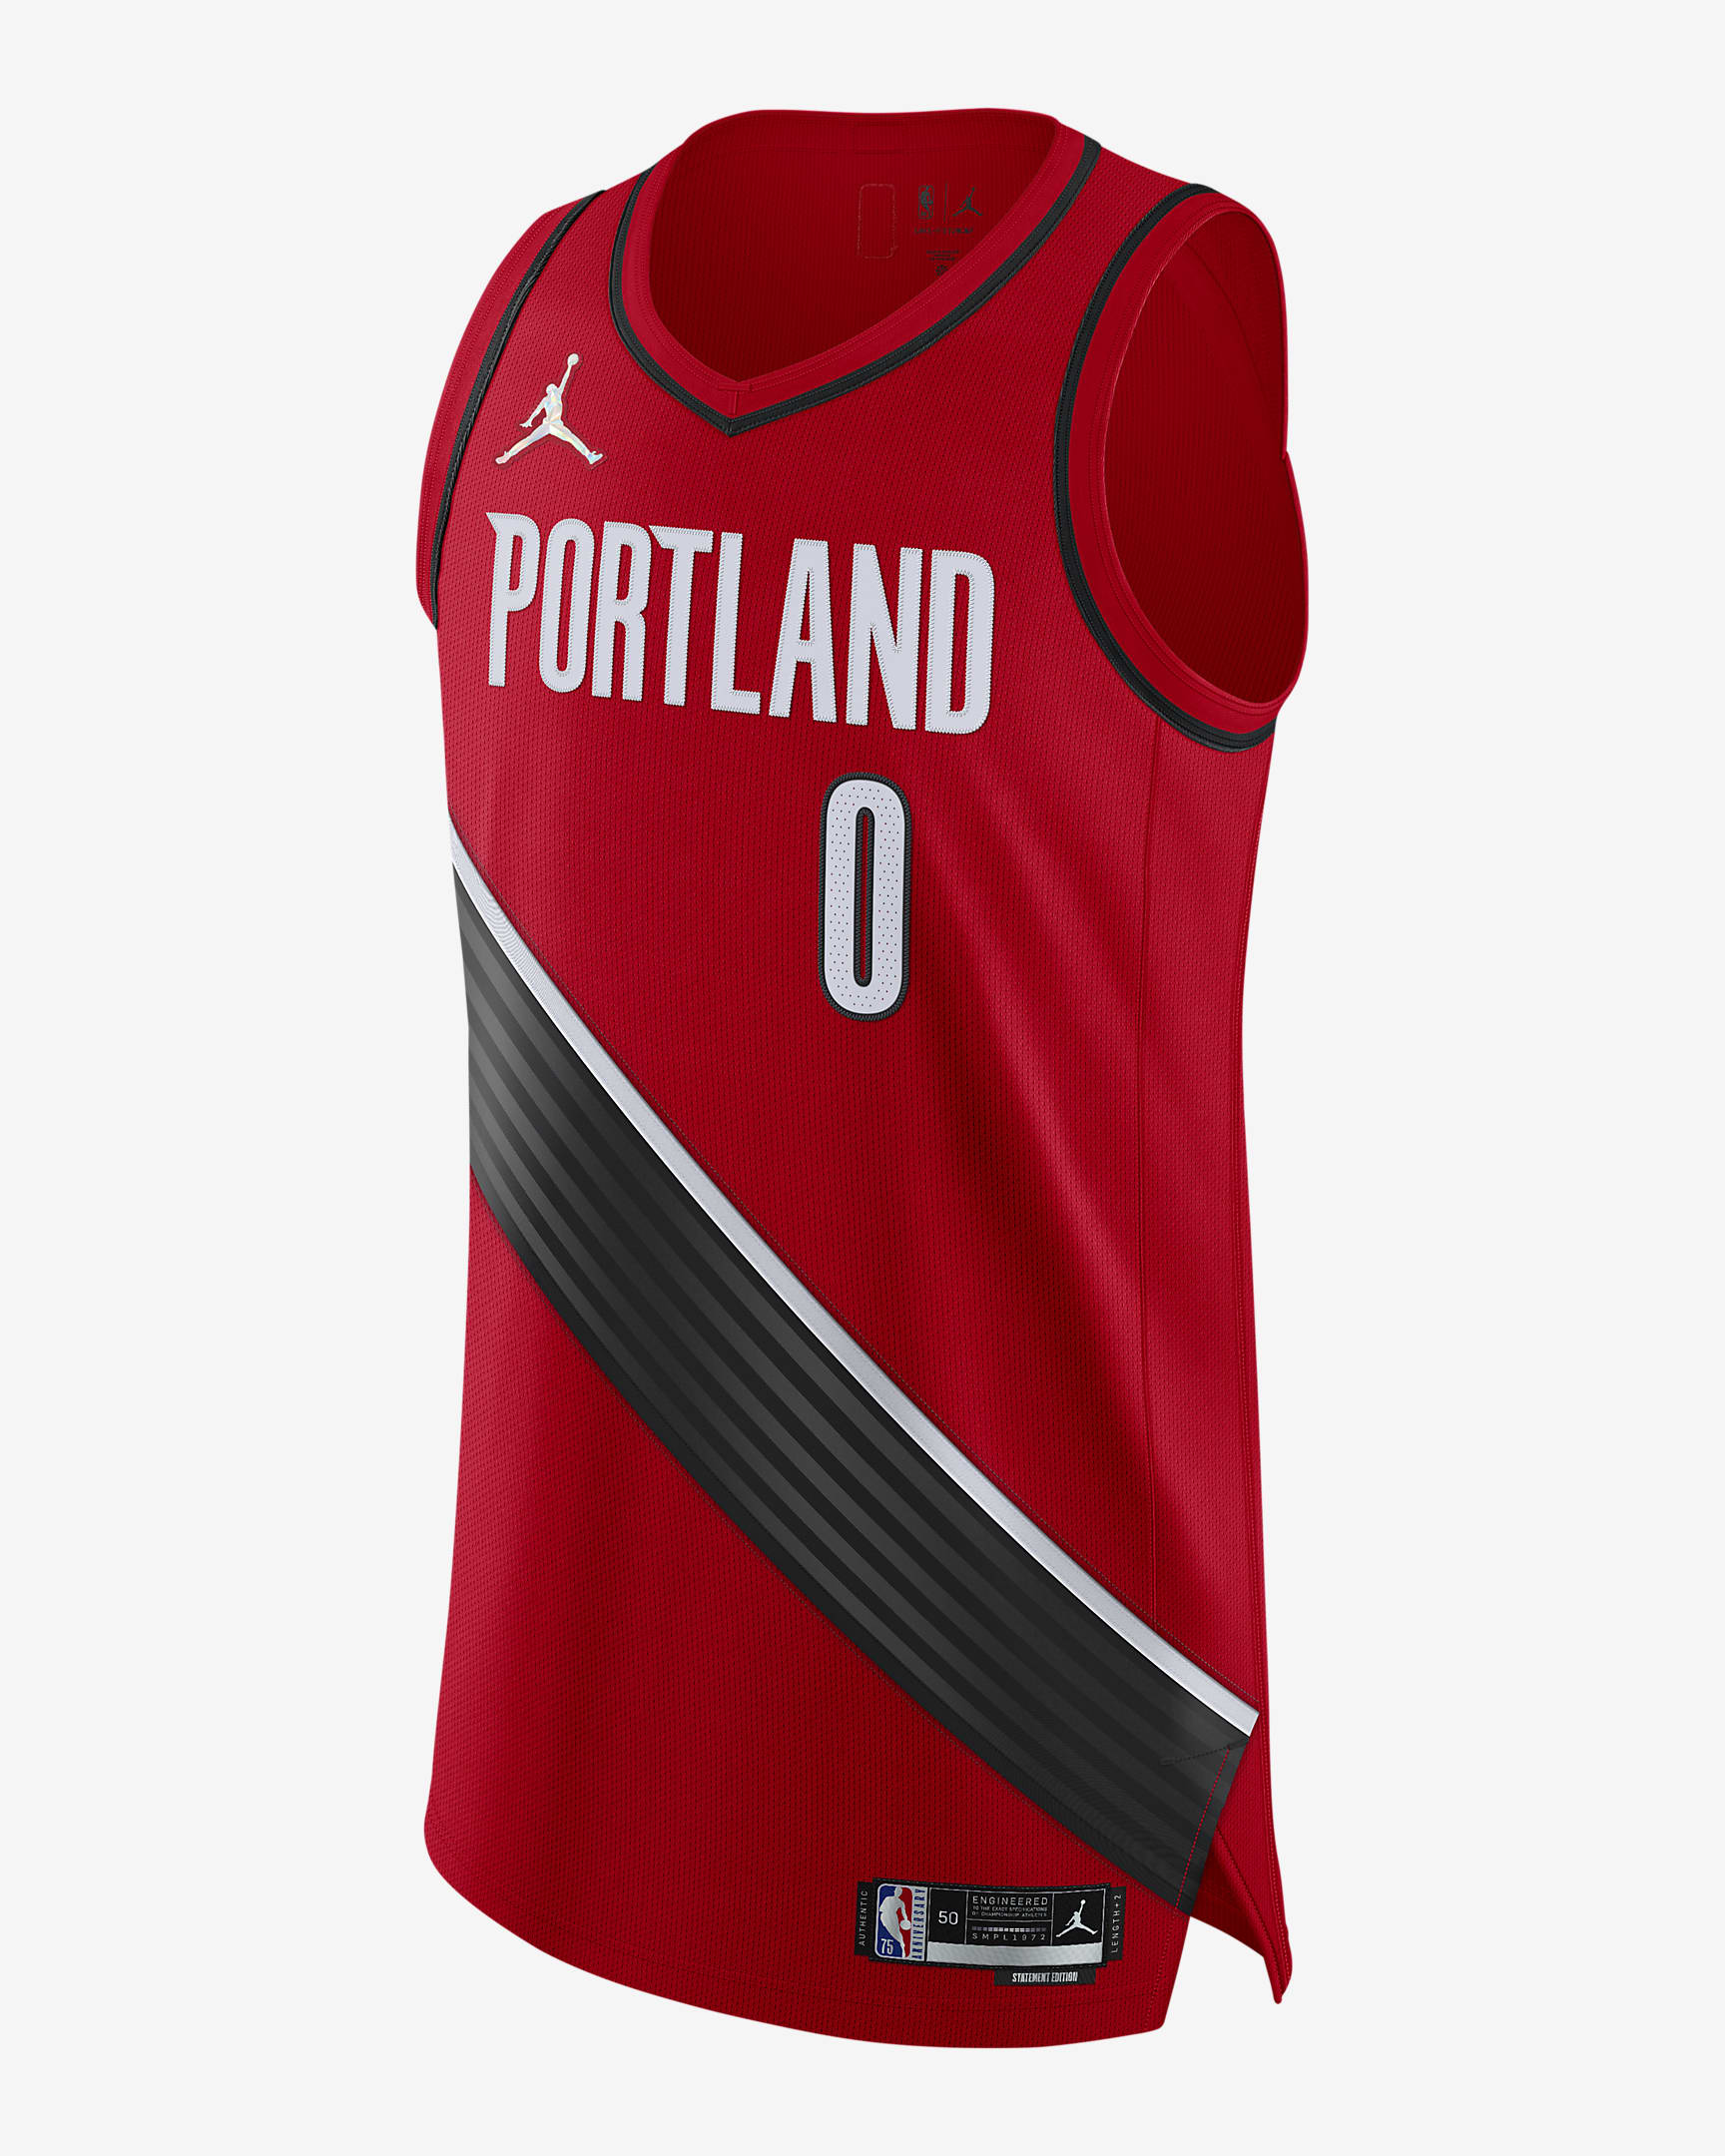 Damian Lillard Portland Trail Blazers Jordan Brand 2020/21